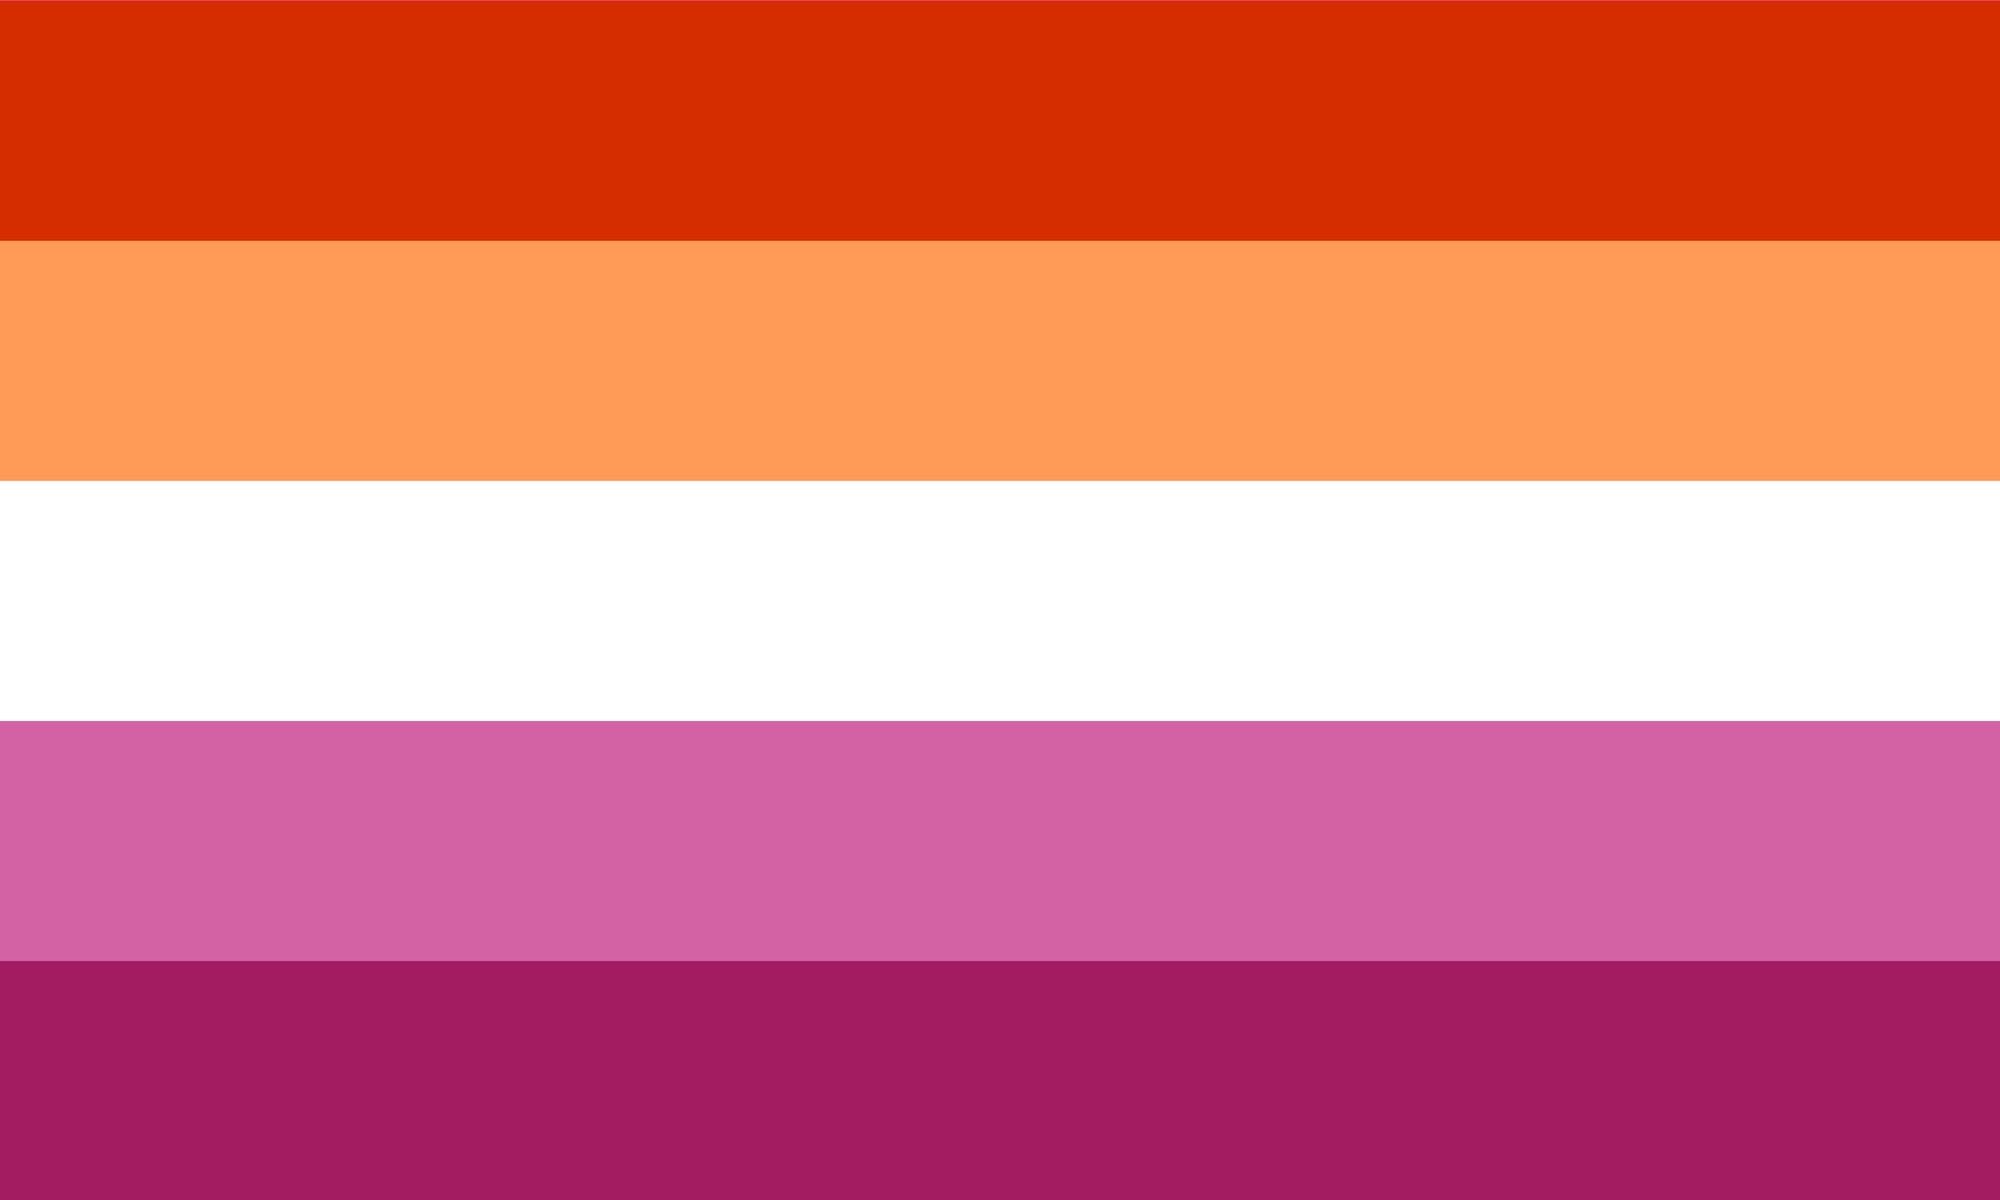 Lesbian Flag Gifts